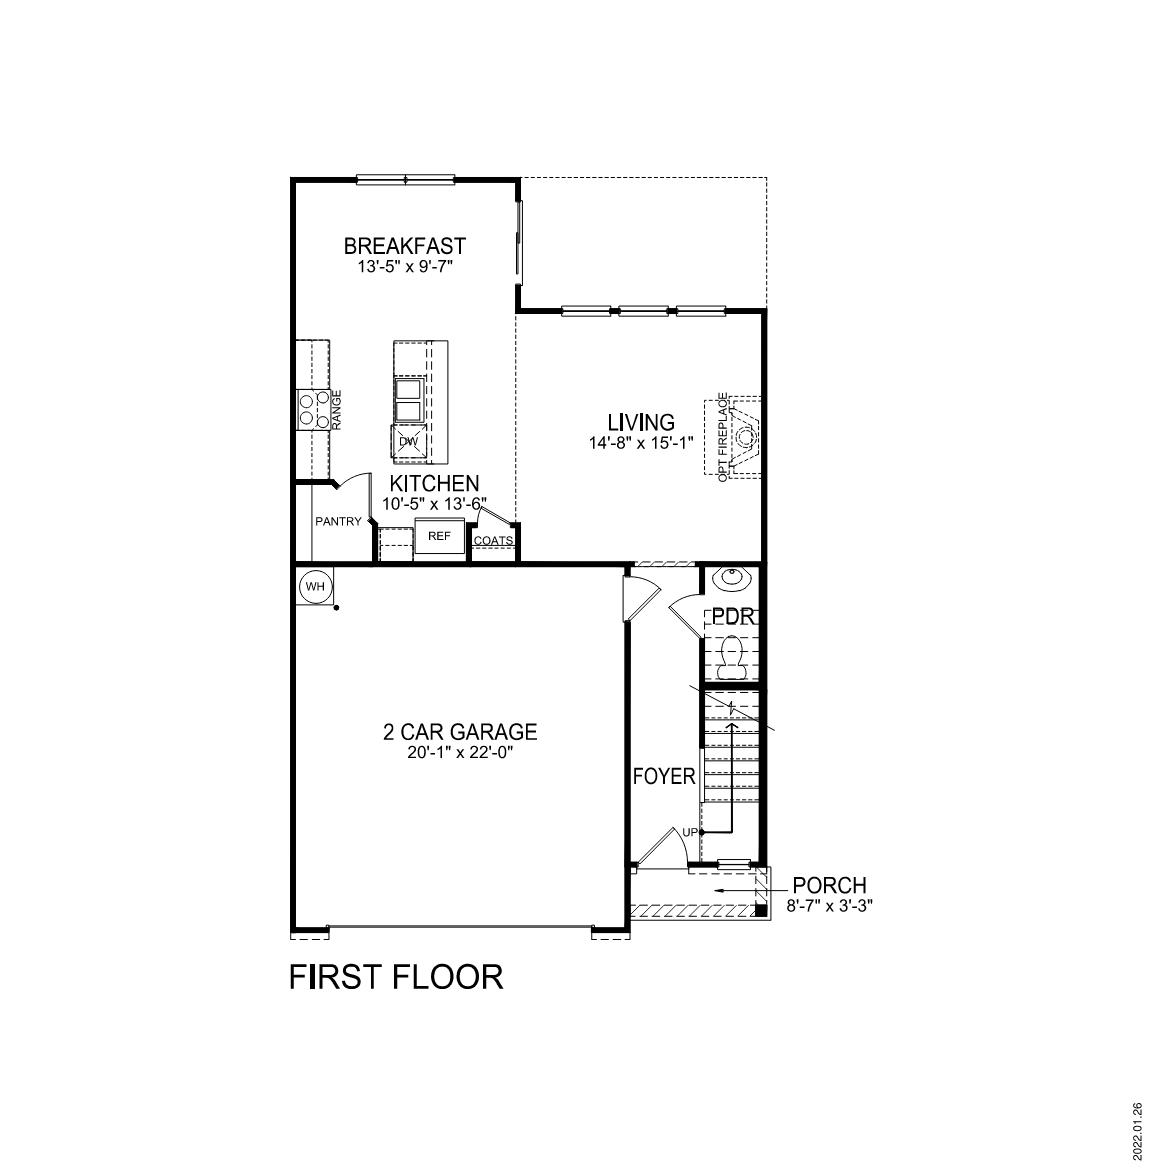 Darwin first floor plan